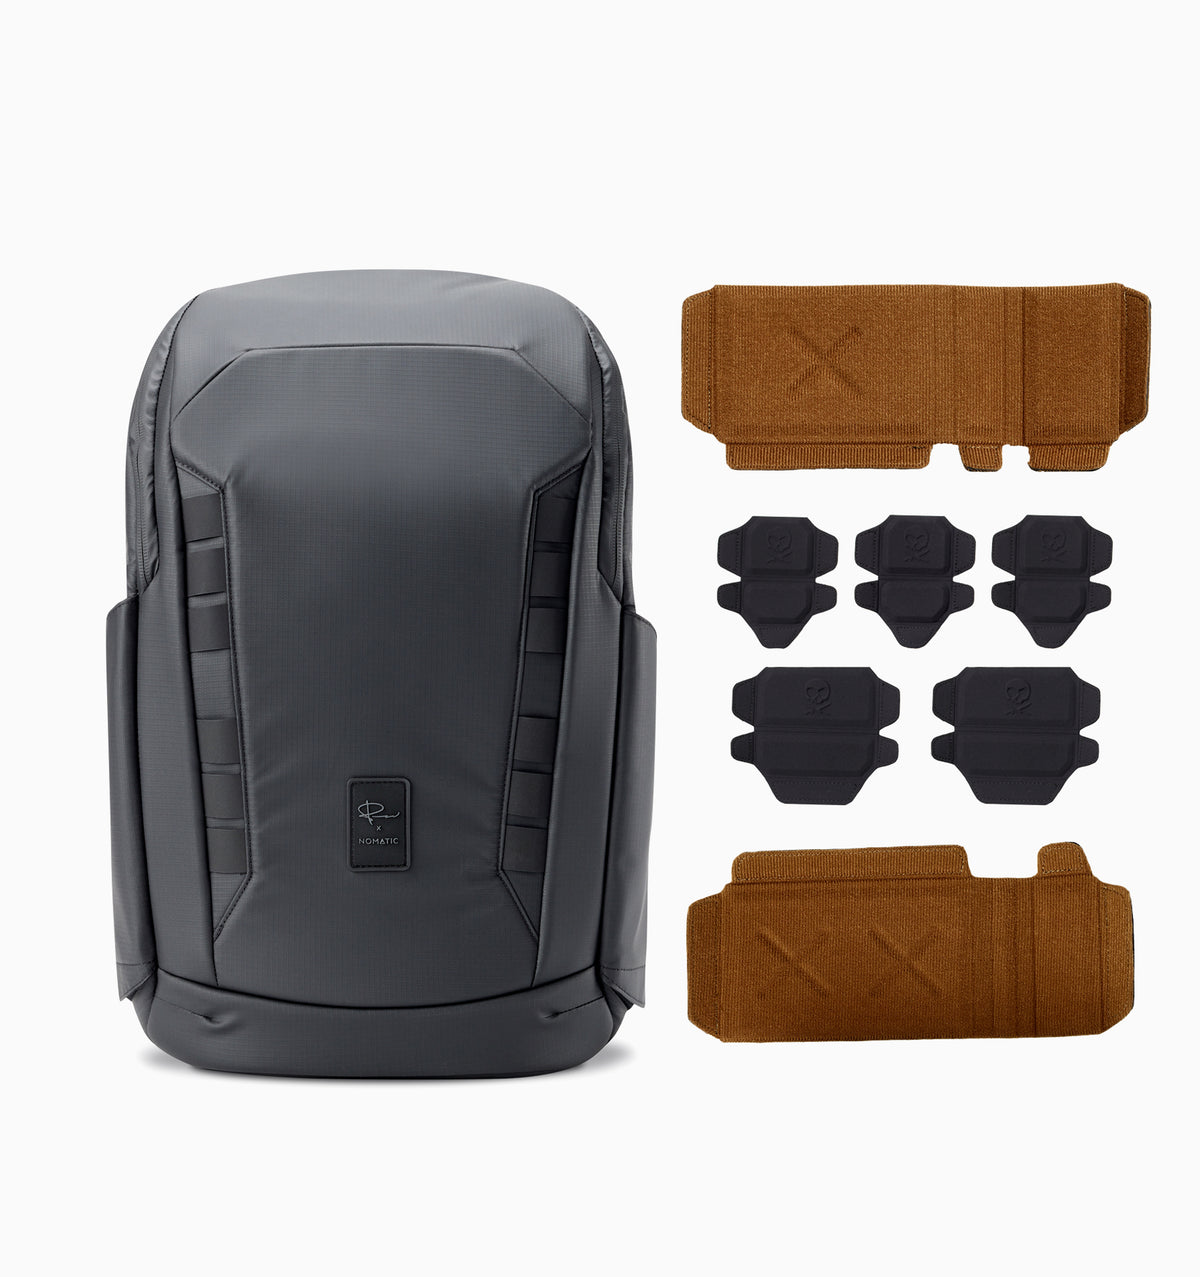 Nomatic 16" McKinnon Camera Backpack 25L with Divider Kit - Black